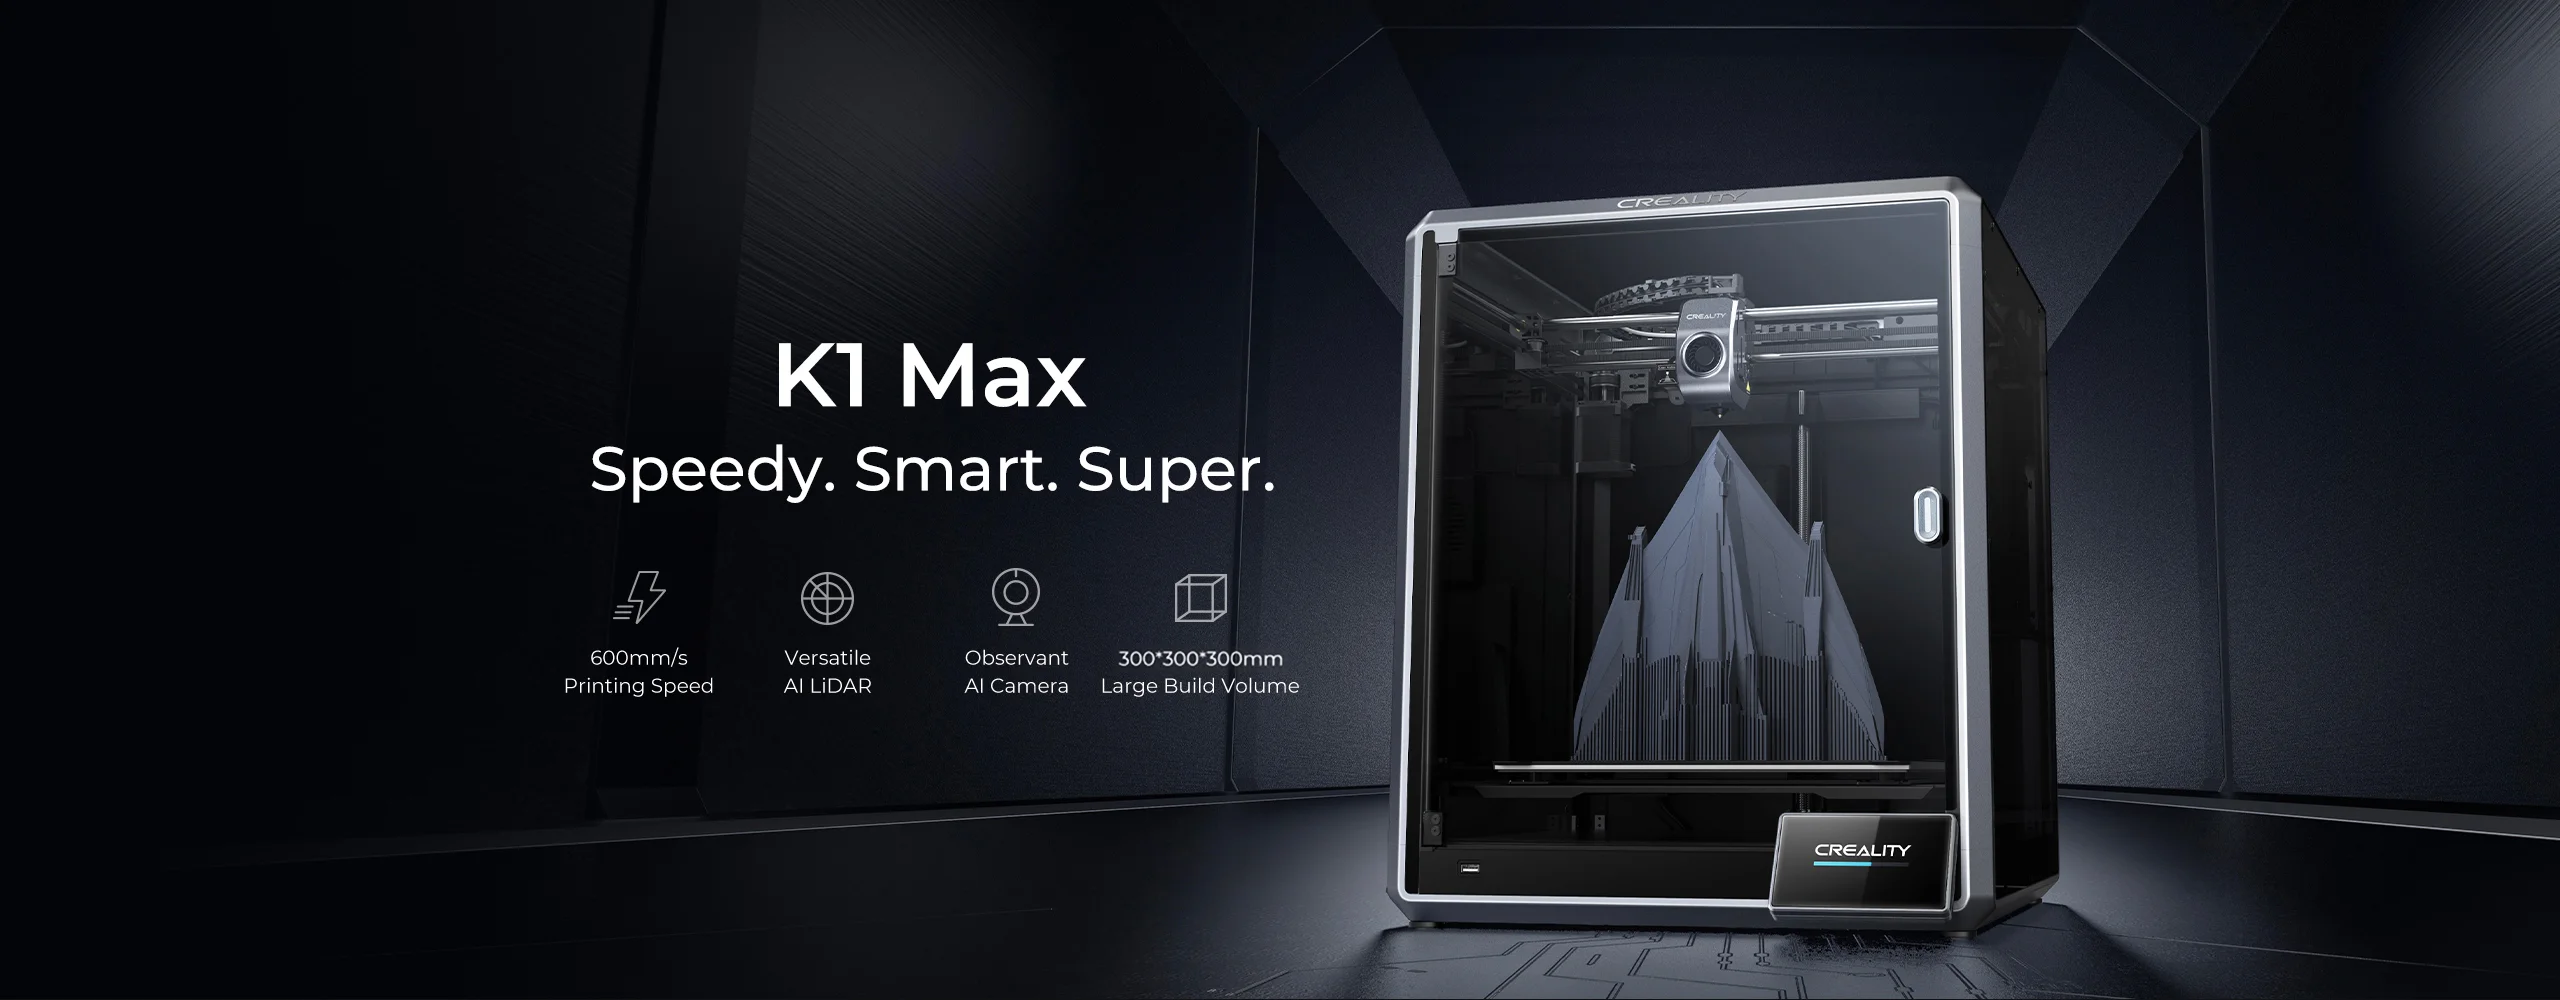 Imprimante 3d Creality K1 max - Technologie Services